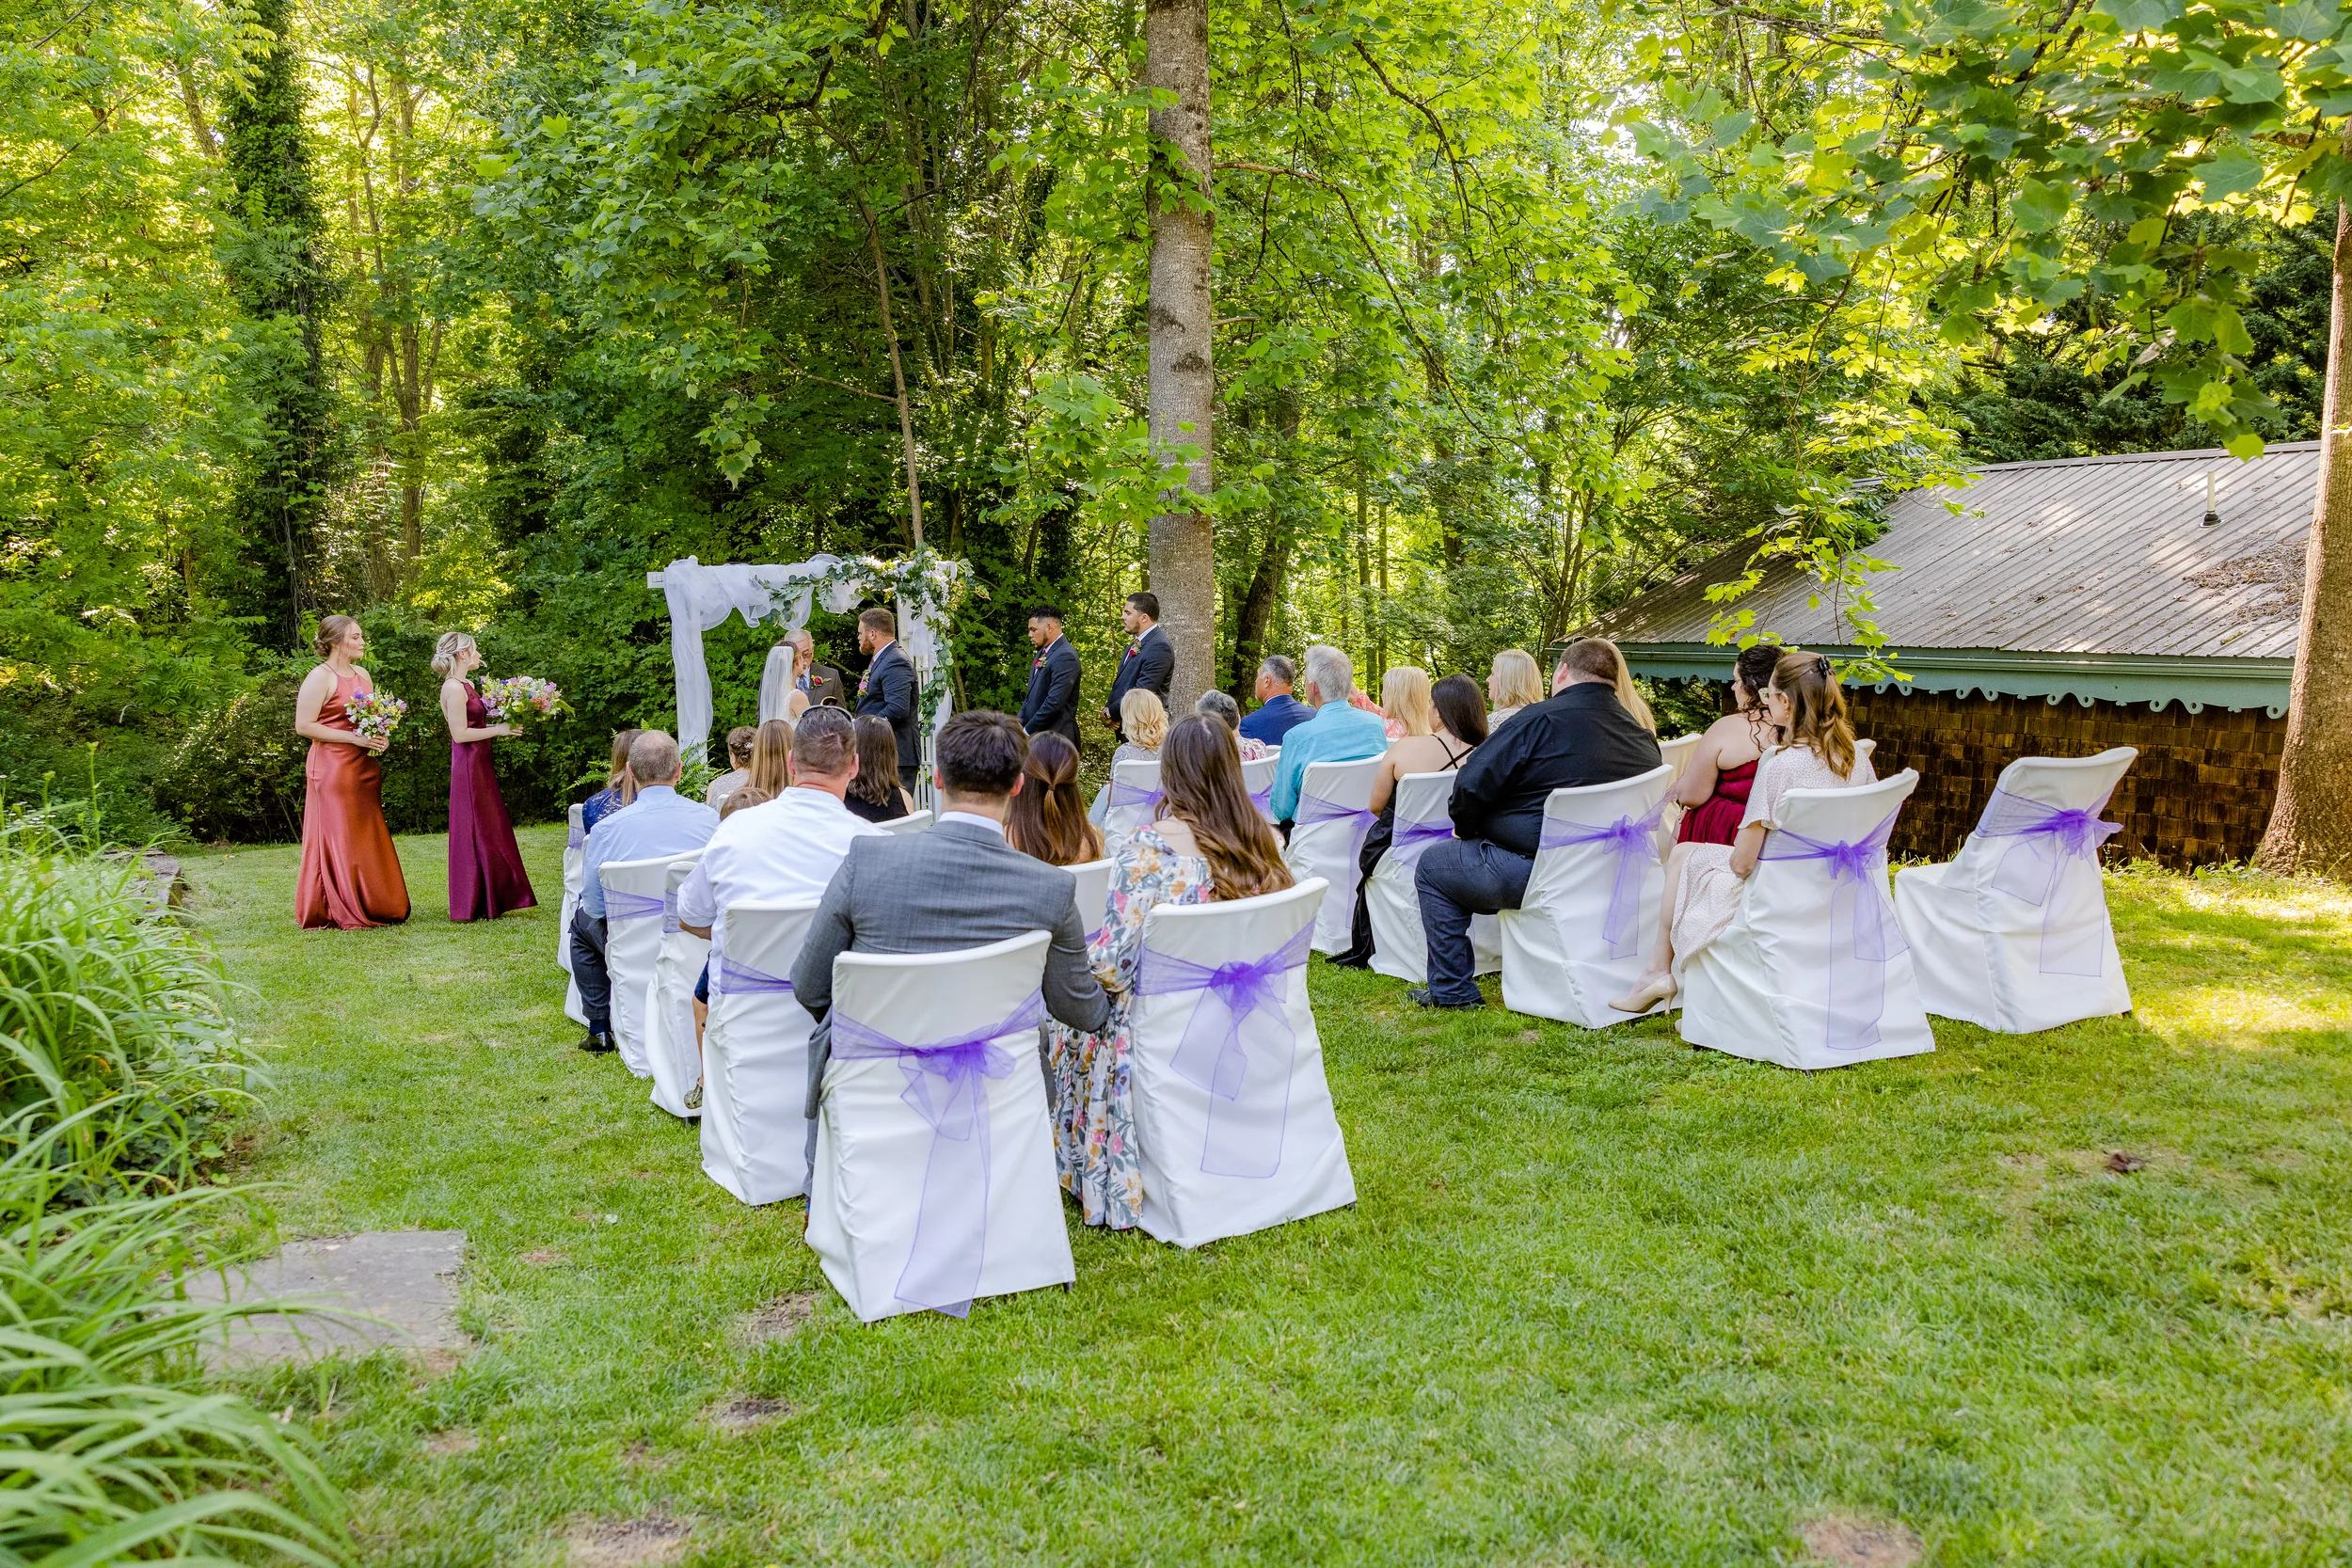 Ceremony in wedding garden